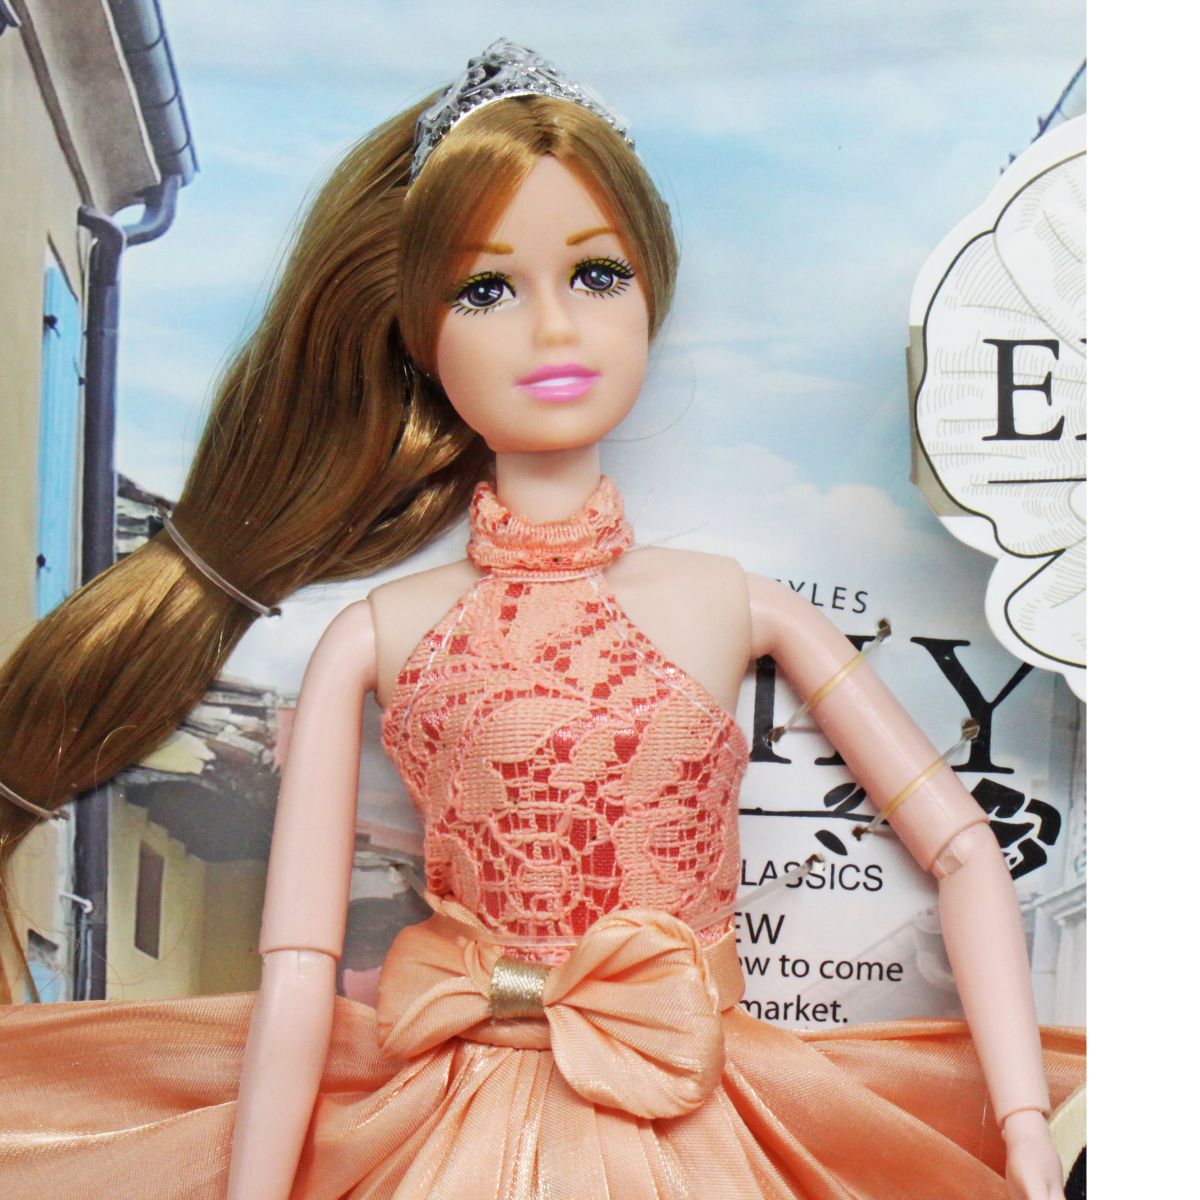 Лялька з аксесуарами "Emily: Fashion classics"